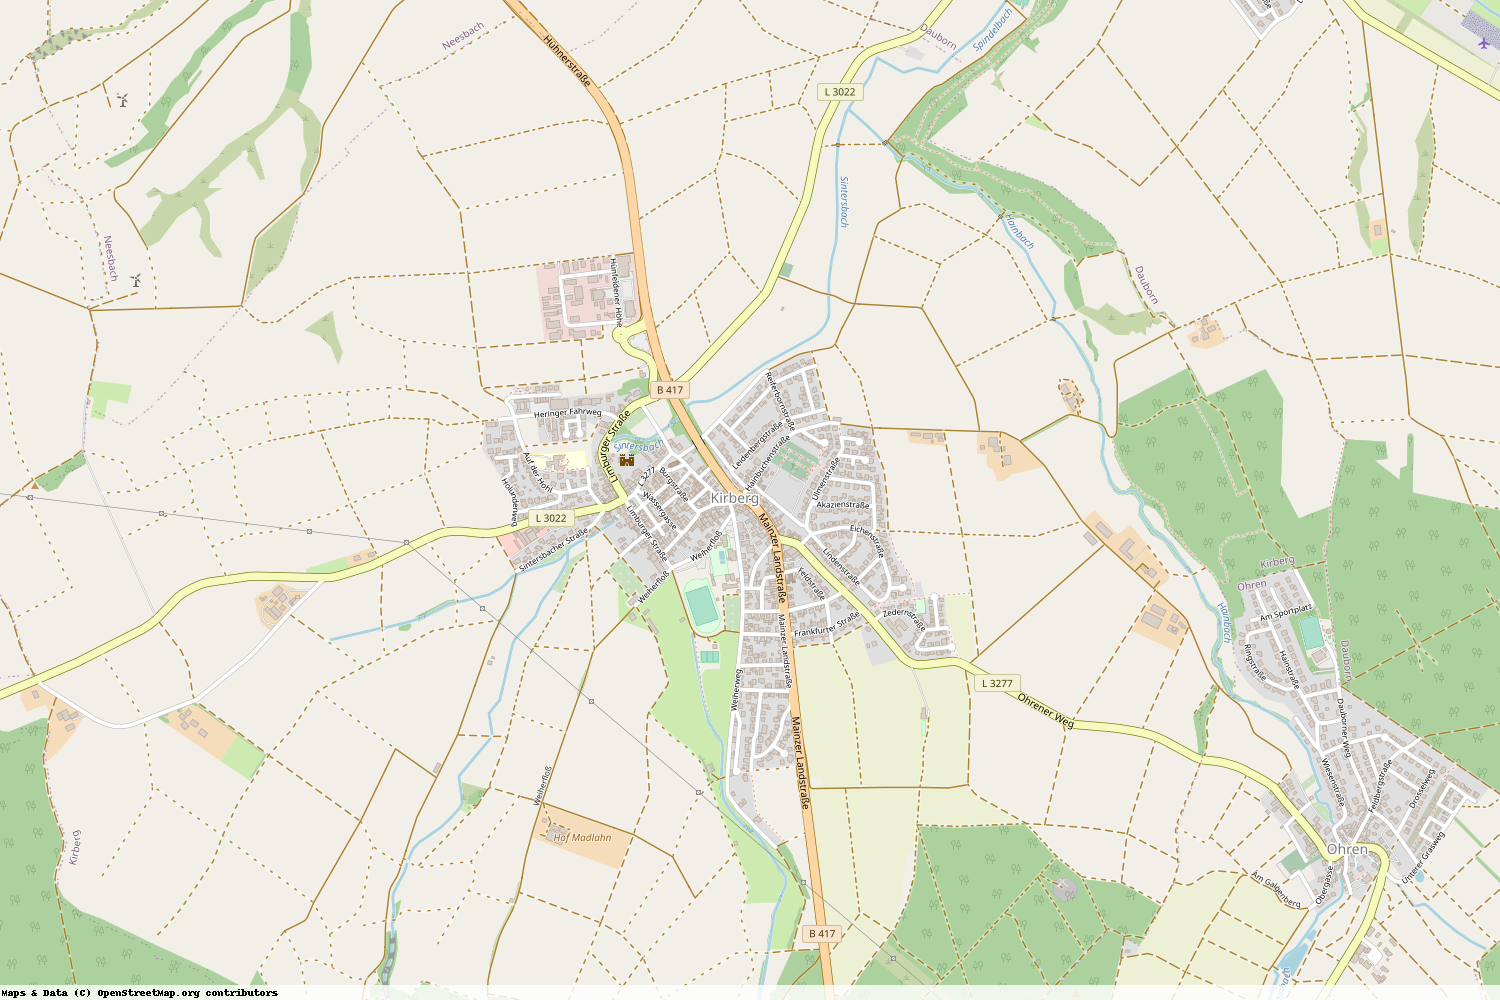 Ist gerade Stromausfall in Hessen - Limburg-Weilburg - Hünfelden?